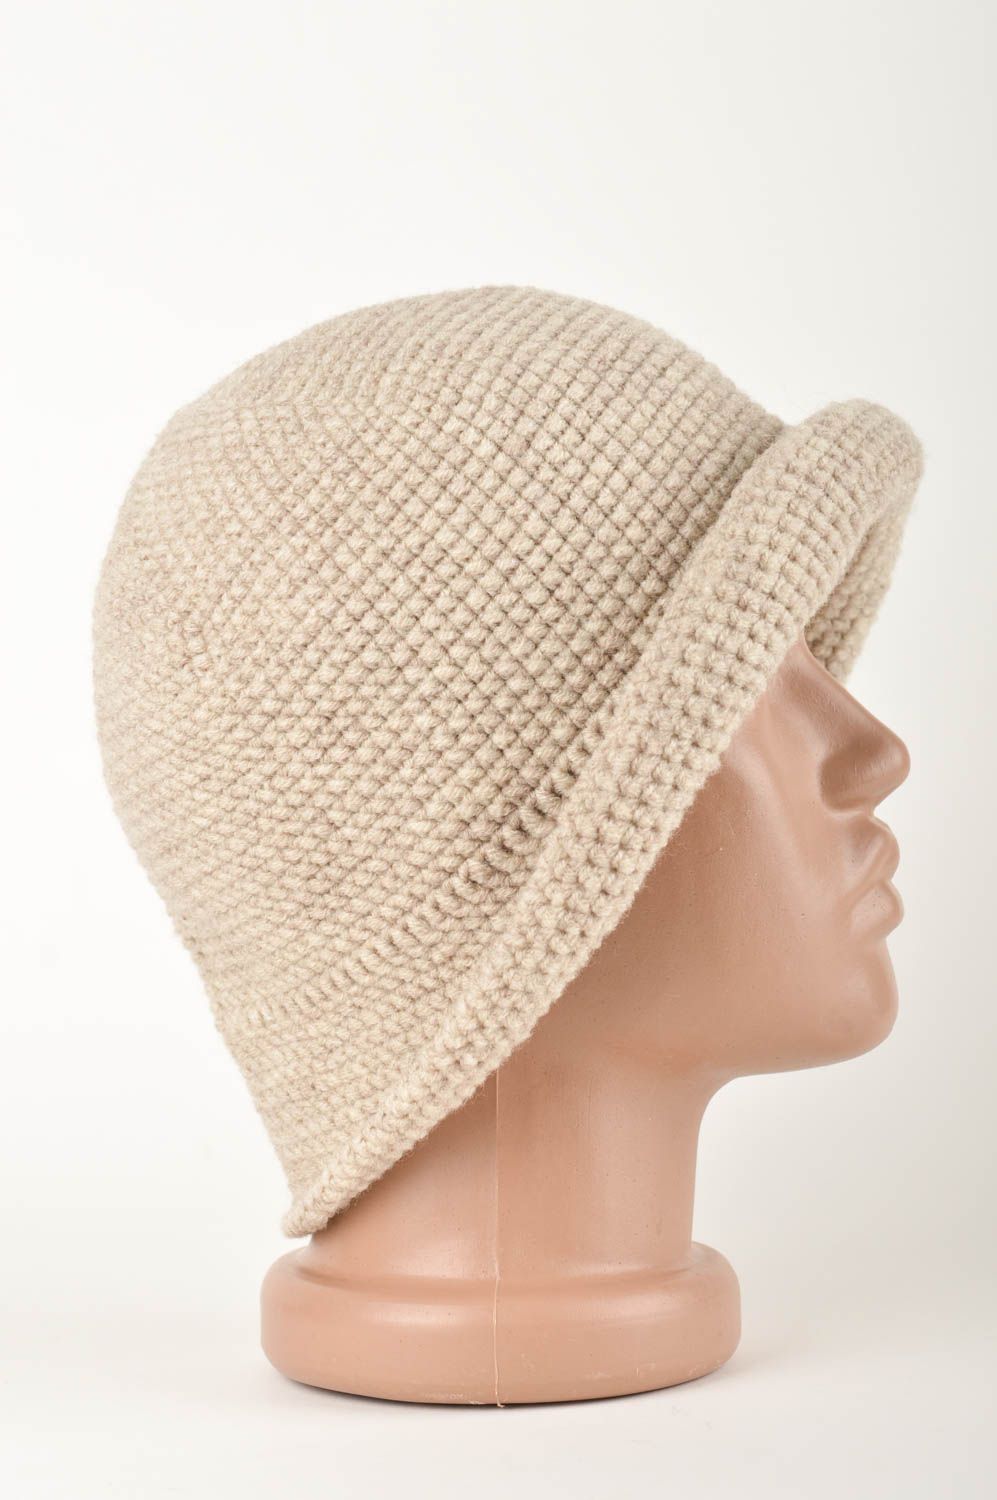 Handmade crocheted headwear unusual designer cap warm winter accessories photo 3